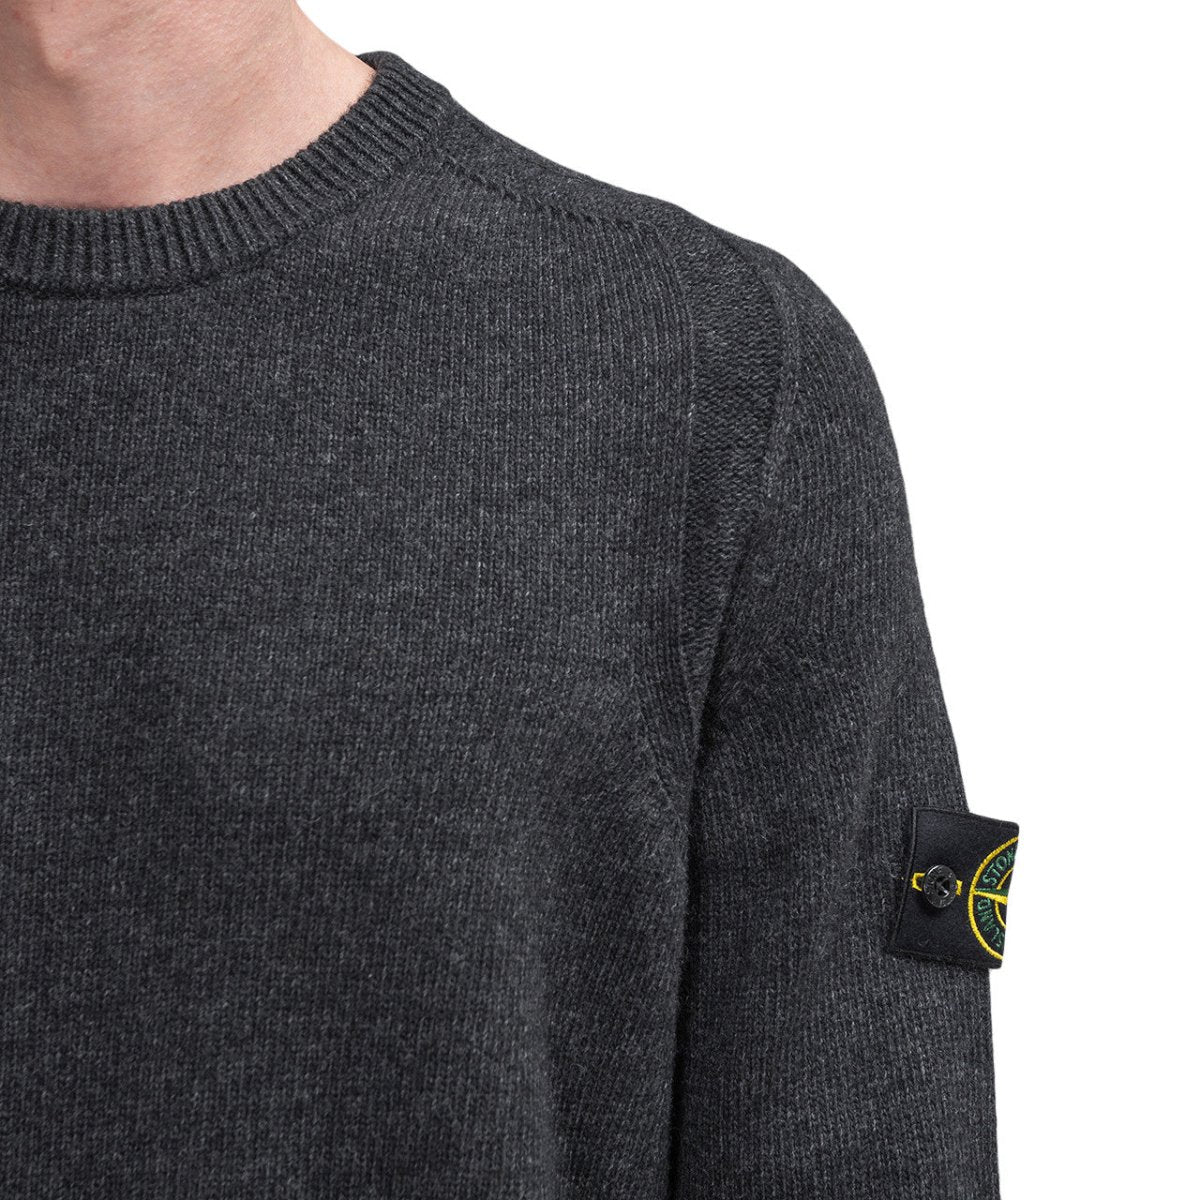 Stone Island Knitwear Sweat Shirt (Grau)  - Allike Store